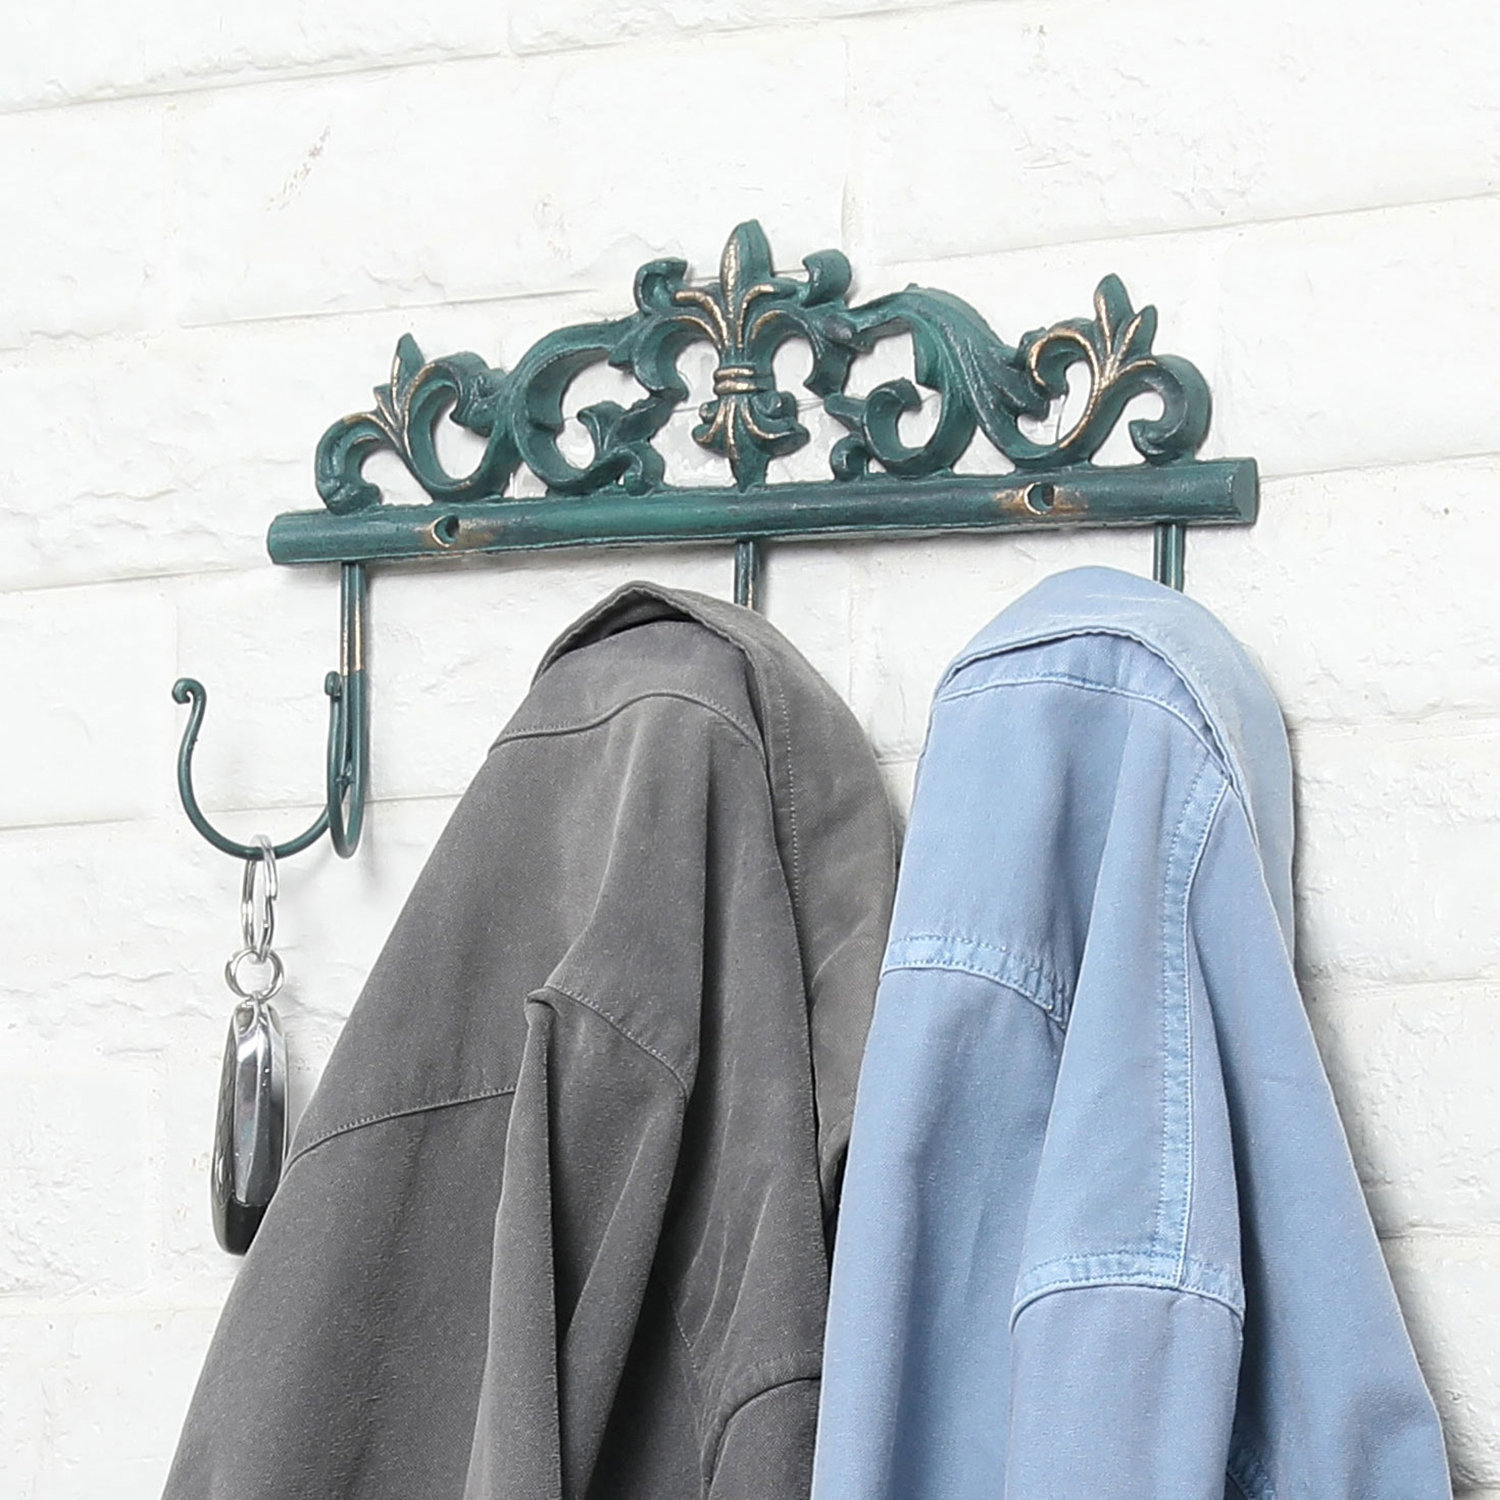 Antique D Flat Ceramic and Metal Wall Hooks Hangers Hanging Coat